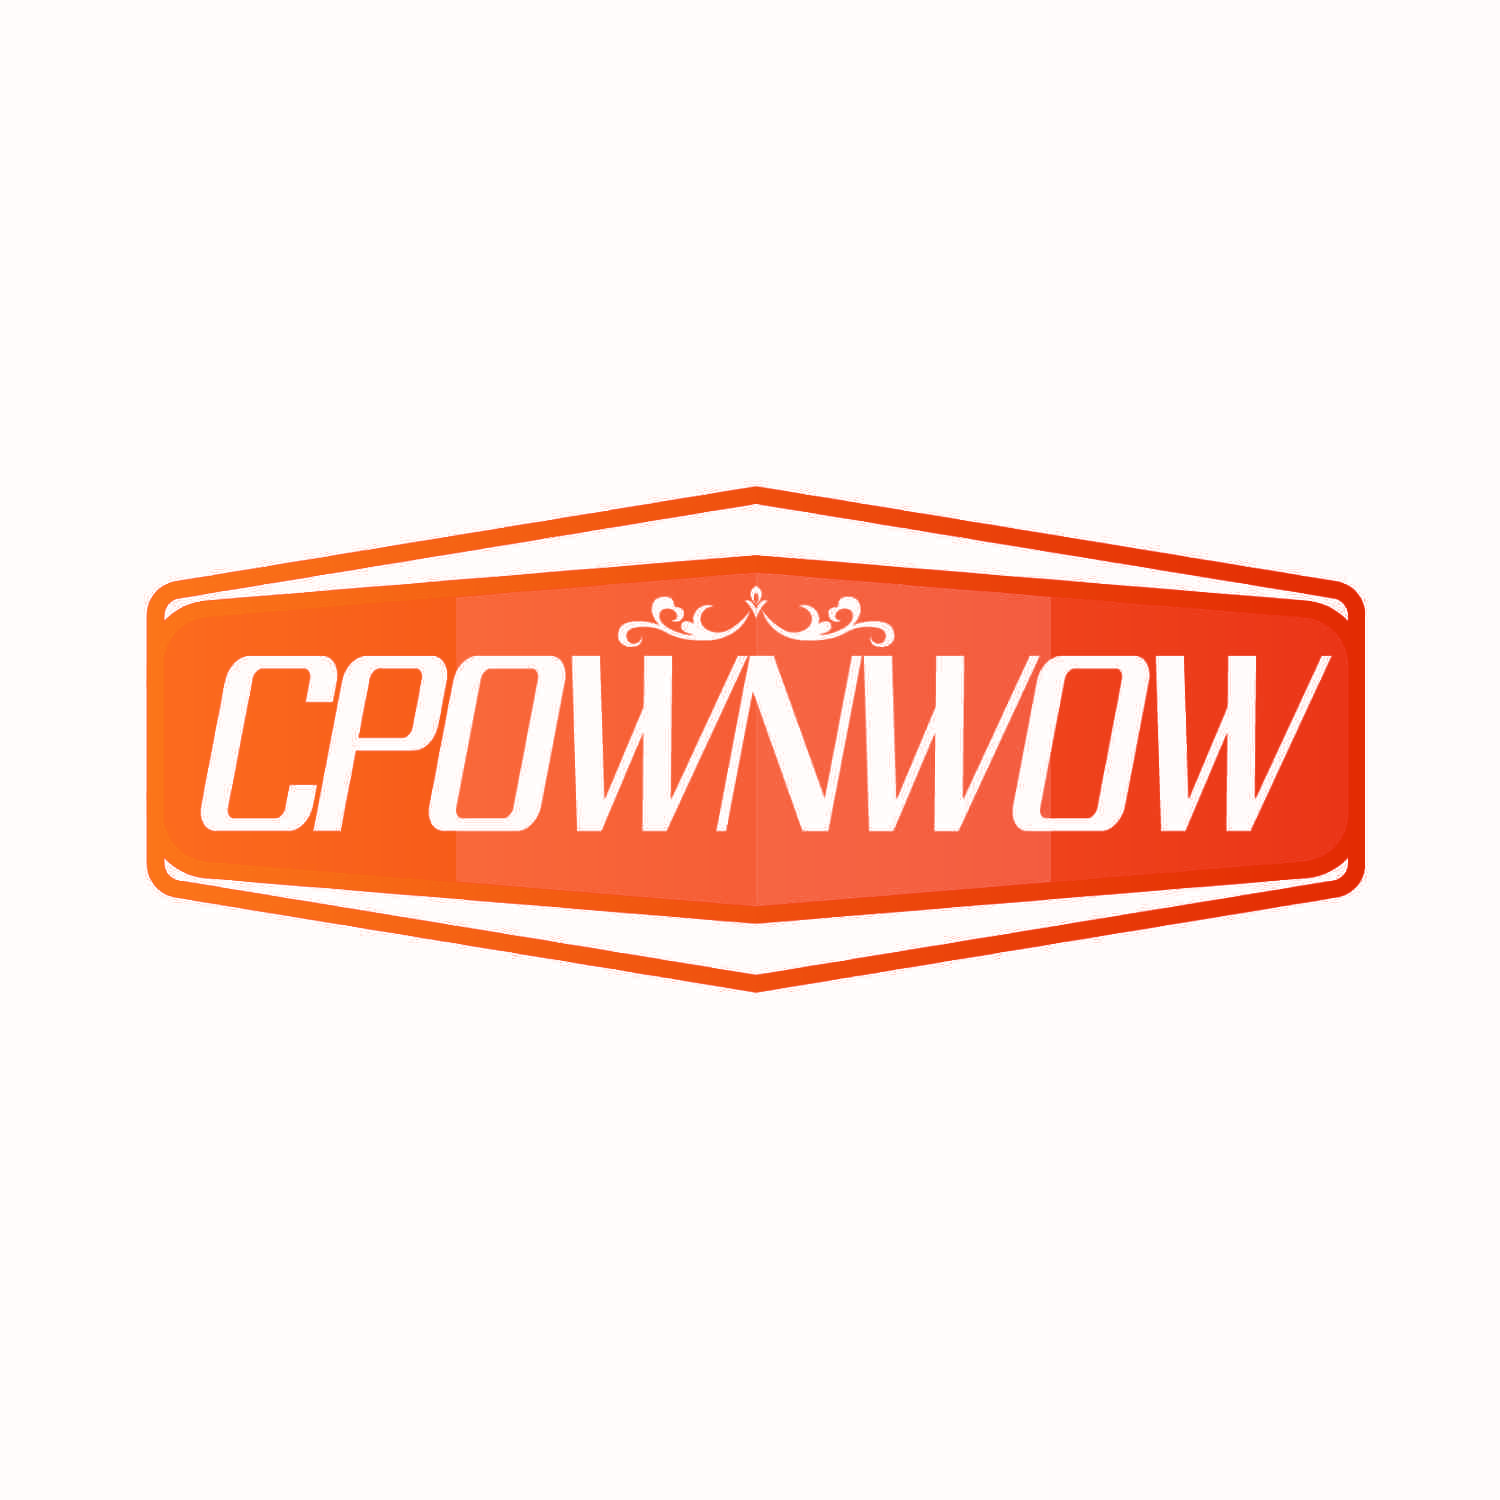 CPOWNWOW